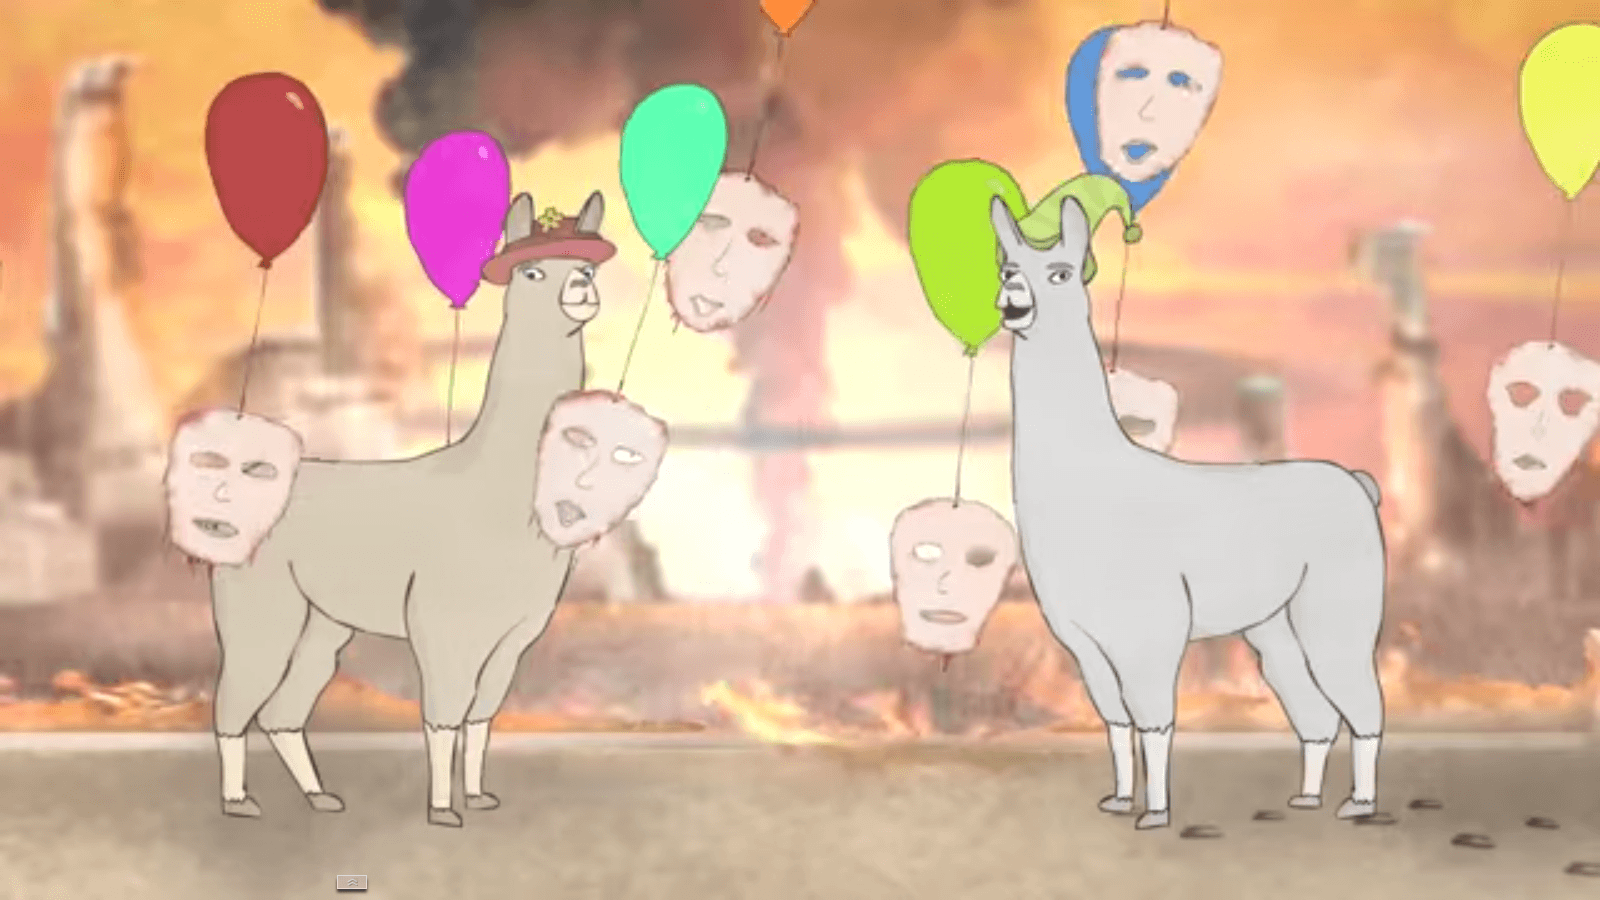 Paul's Birthday. Llamas With Hats